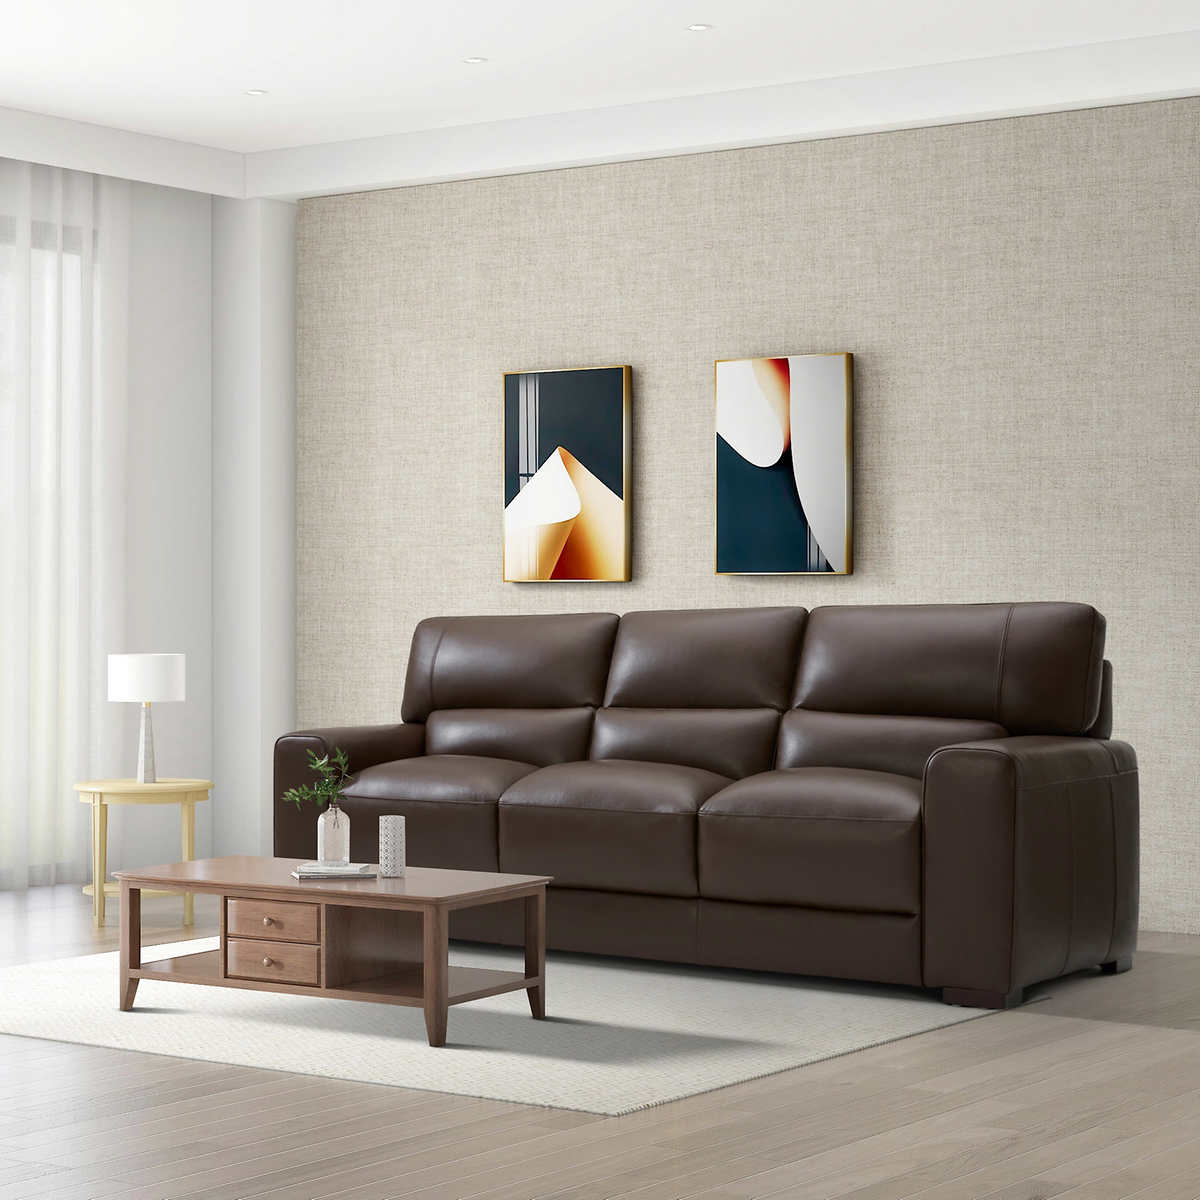 Rawlins Leather Sofa Costco, Who Makes Costco Leather Furniture